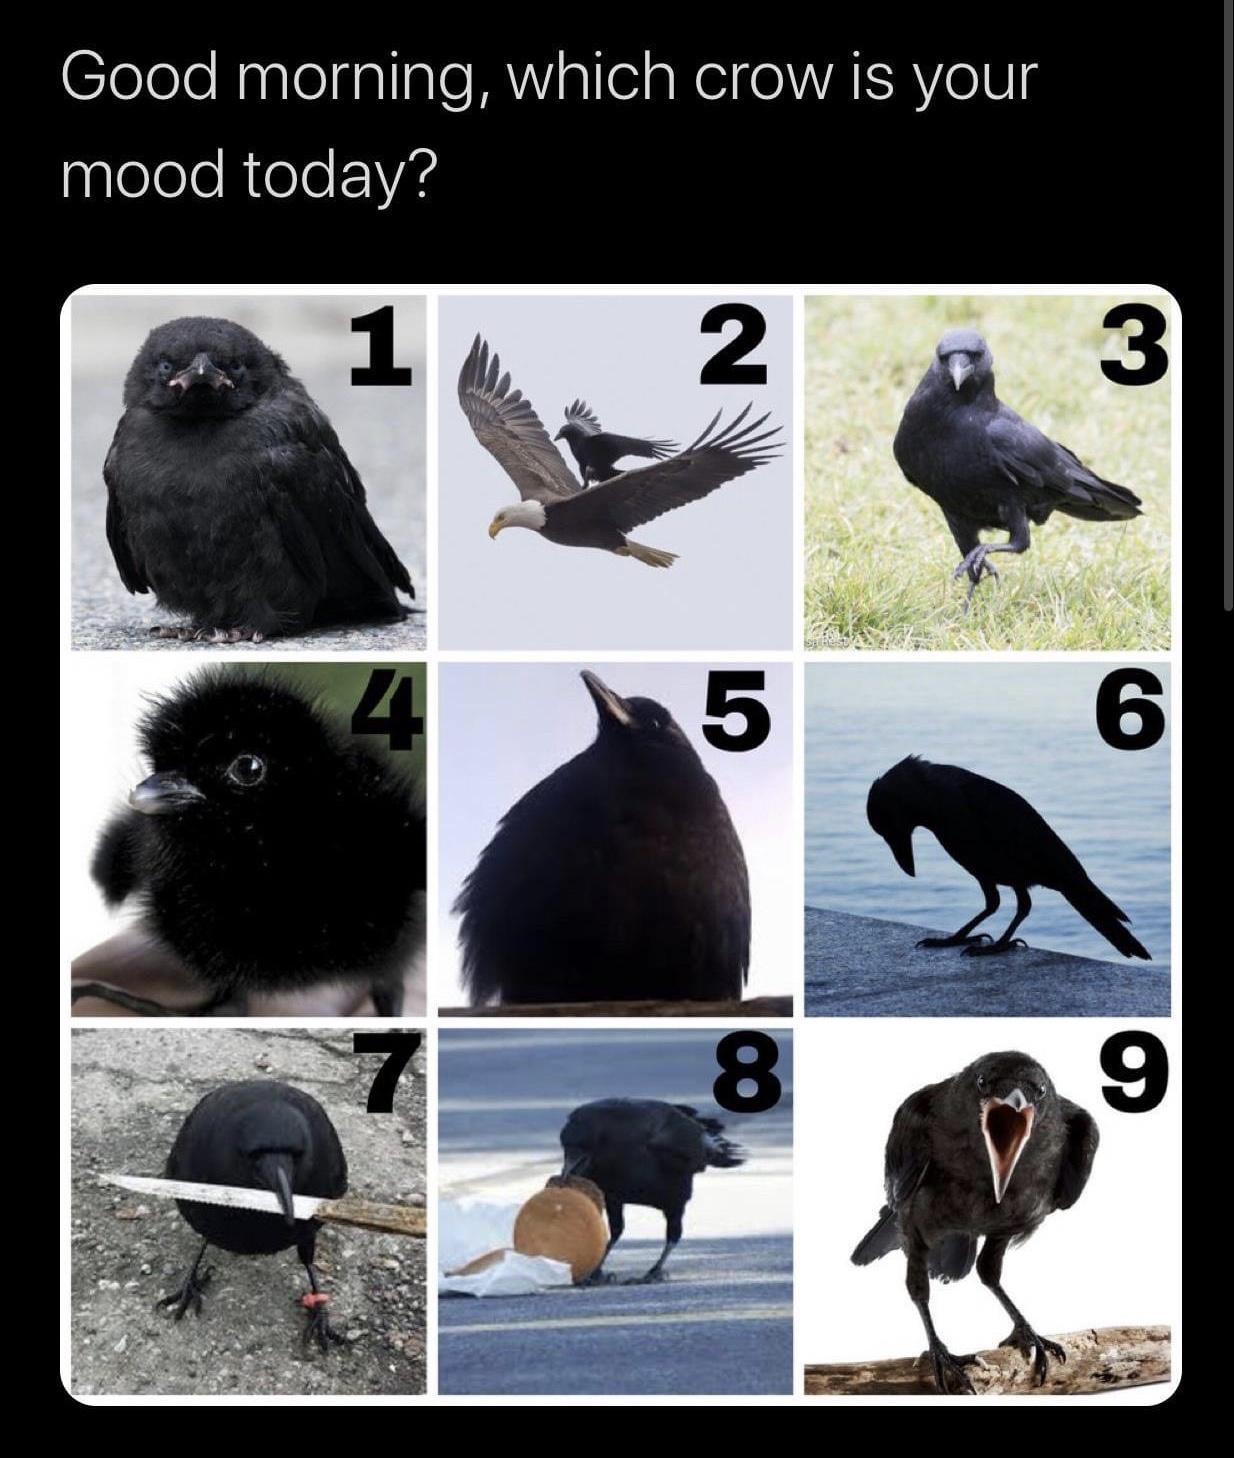 crow number 7